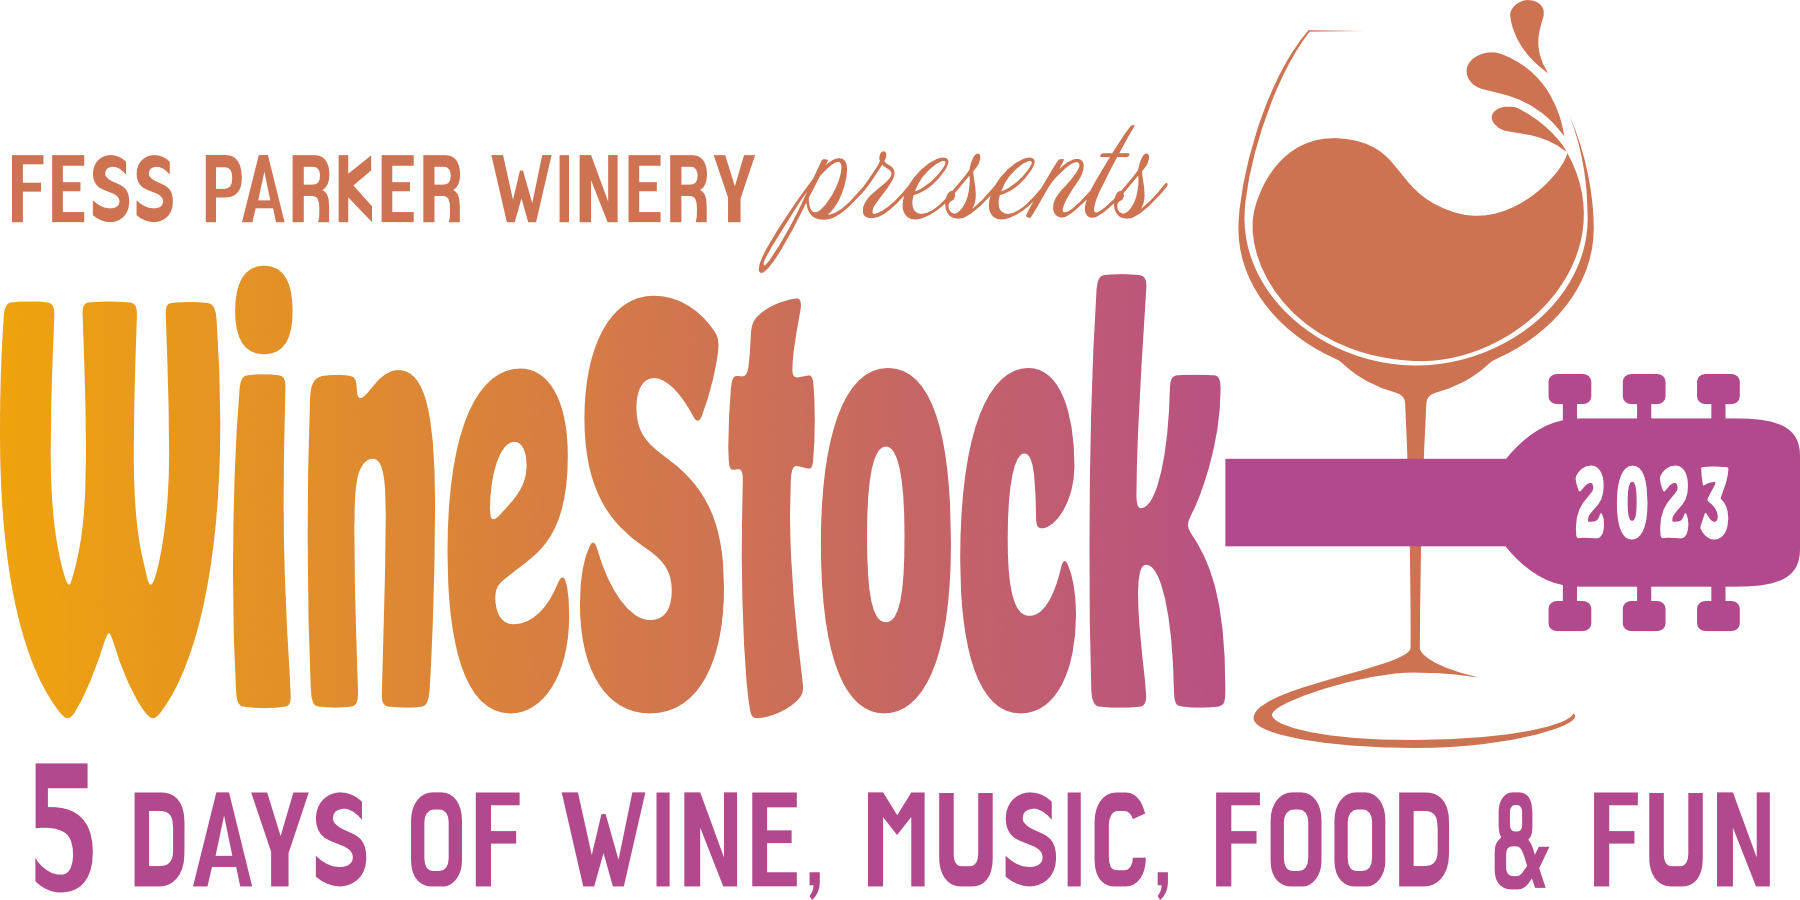 Fess Parker Winery Presents WineStock 2023